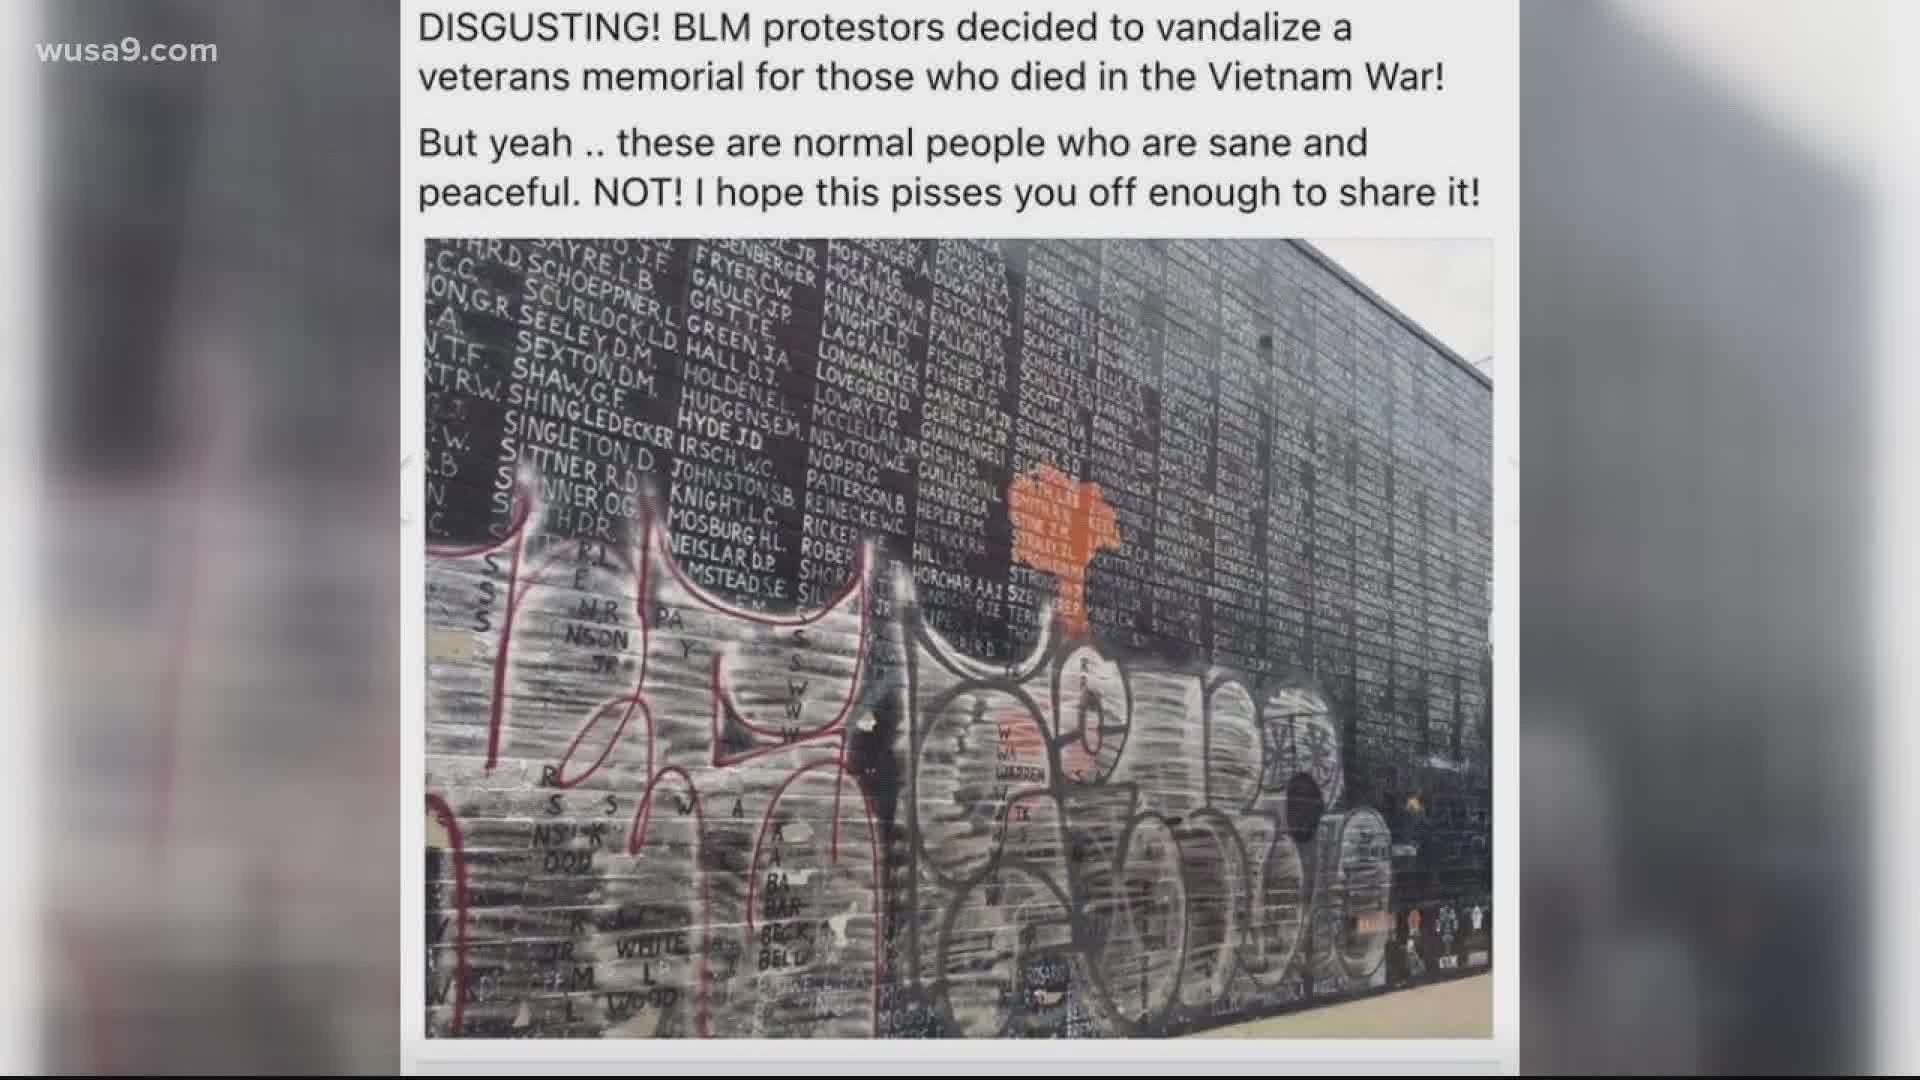 No it has not been vandalized. The original image is of graffiti on the Venice Beach California Vietnam Veterans Memorial back in 2016